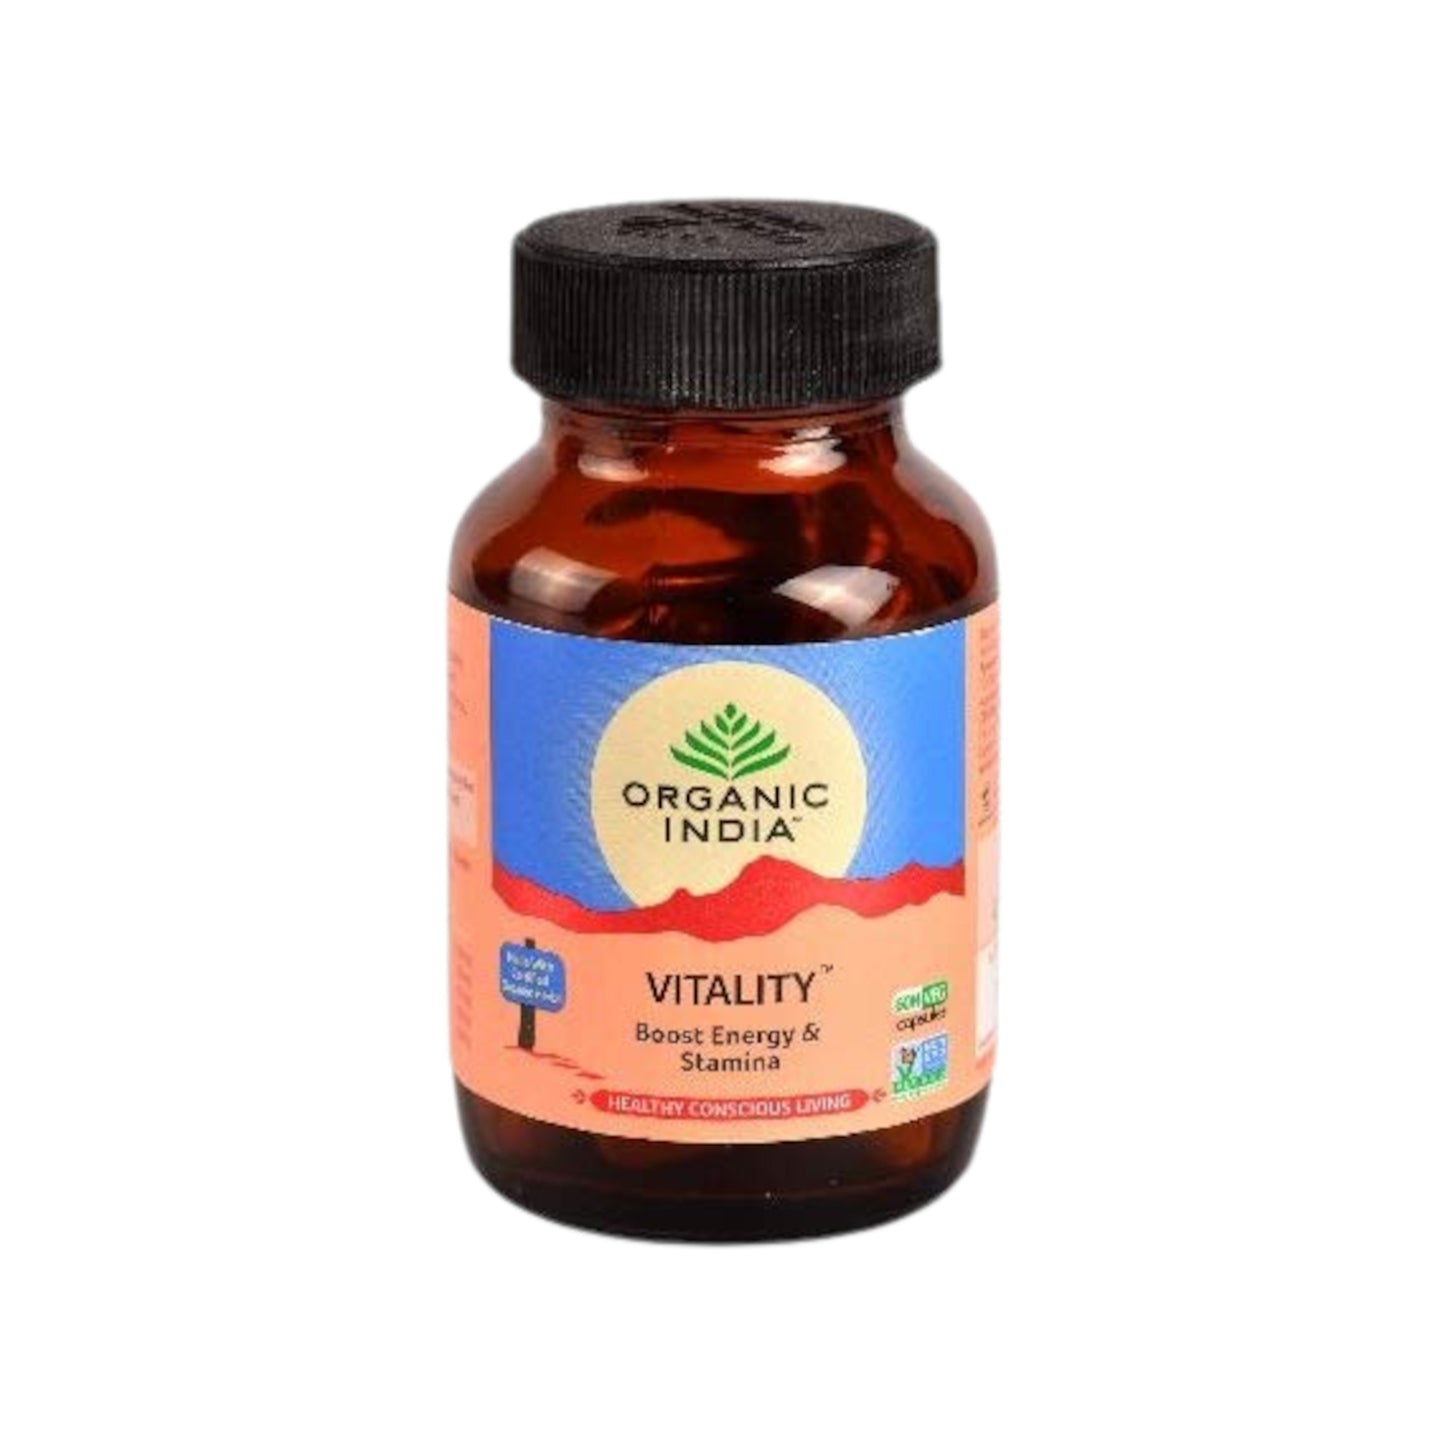 Organic India - Vitality 60 Capsules